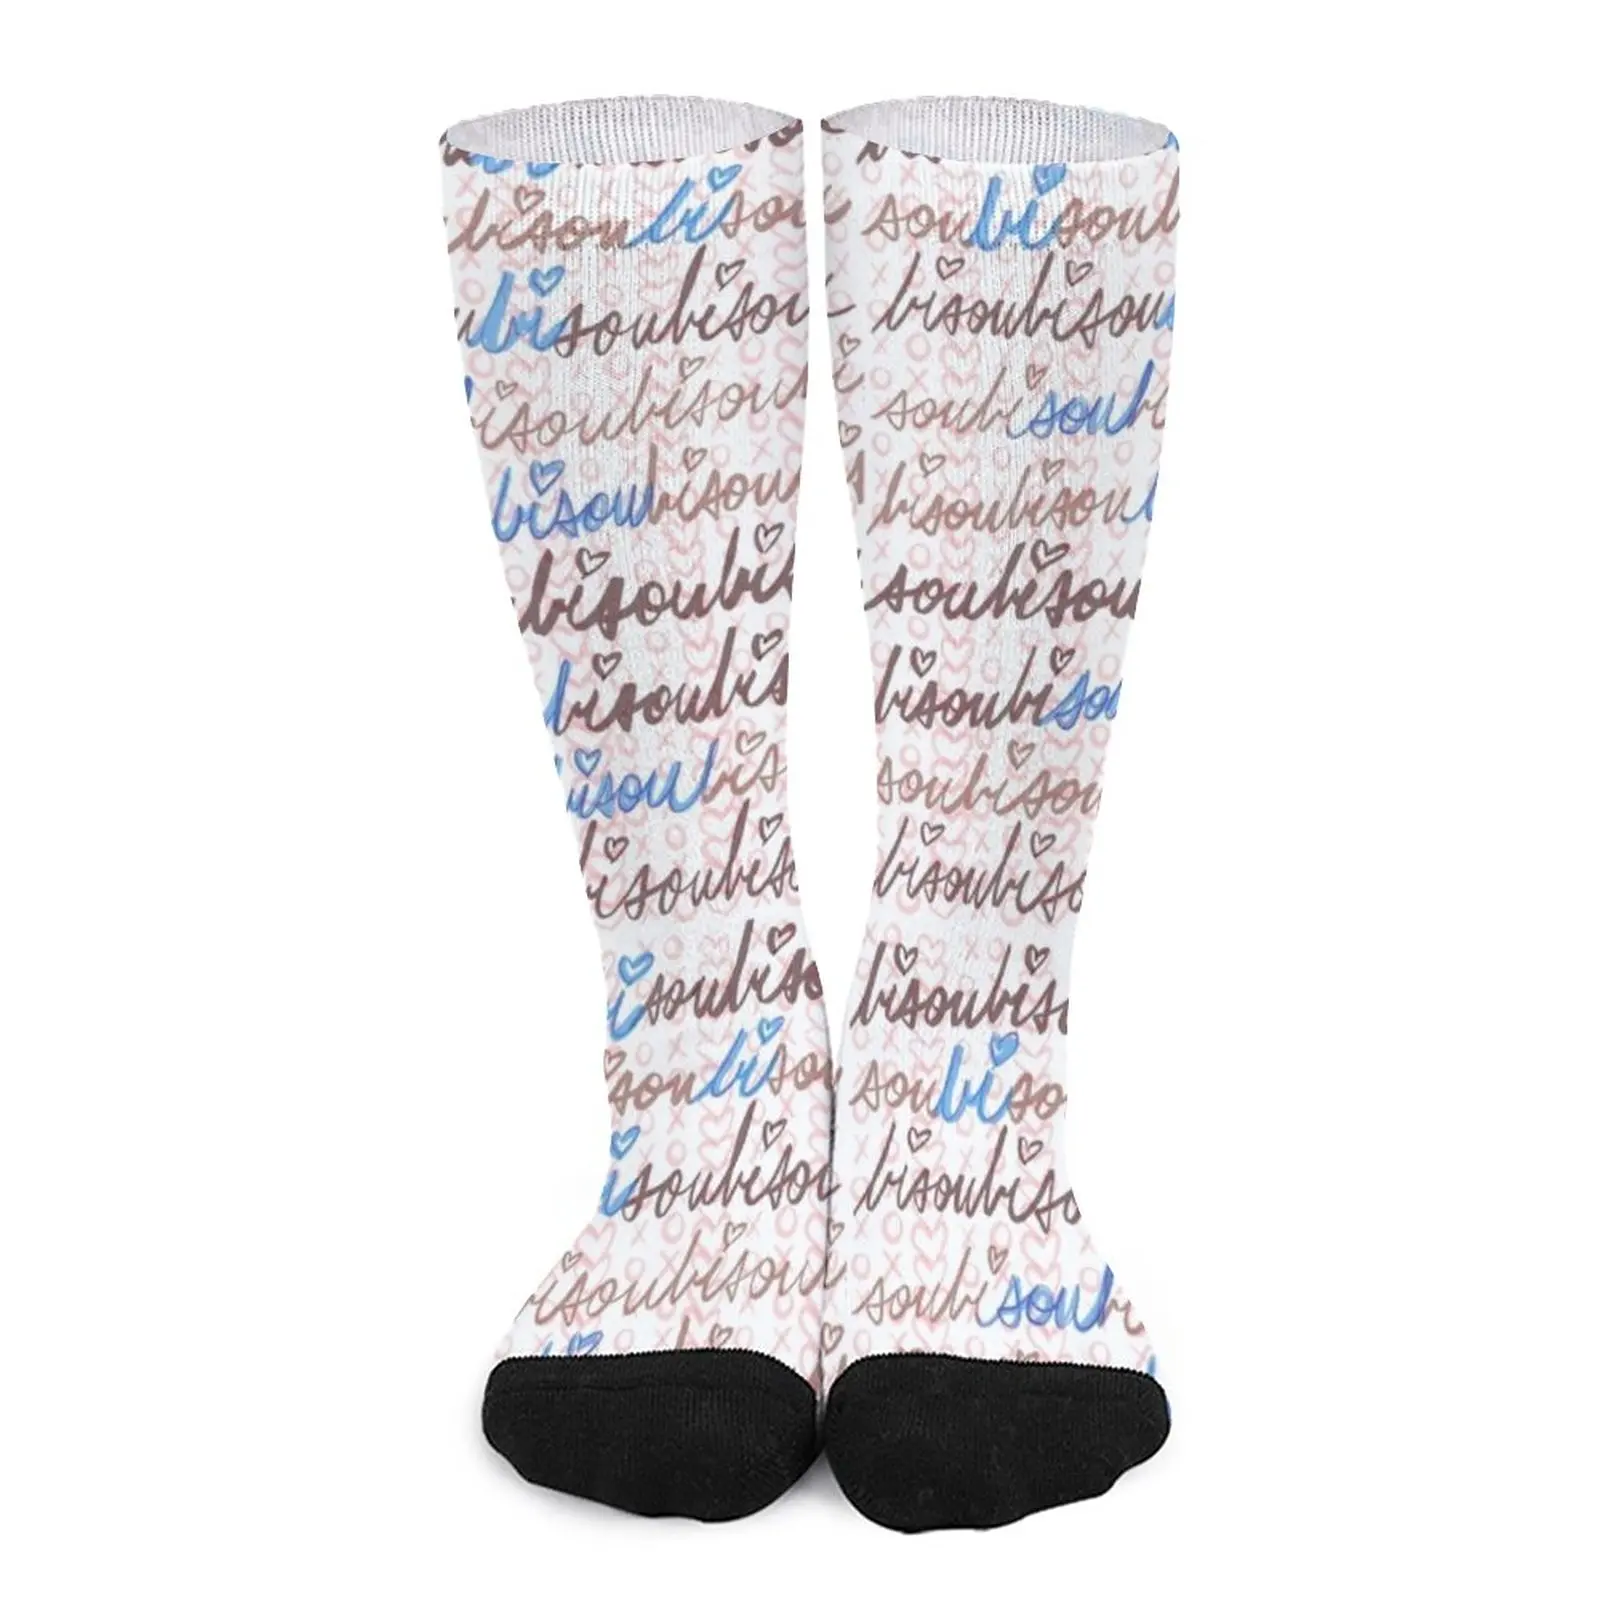 Bi Soul Bisou Blue and Brown Socks Stockings Argentina funny socks for Women till bronner blue eyed soul 1 cd